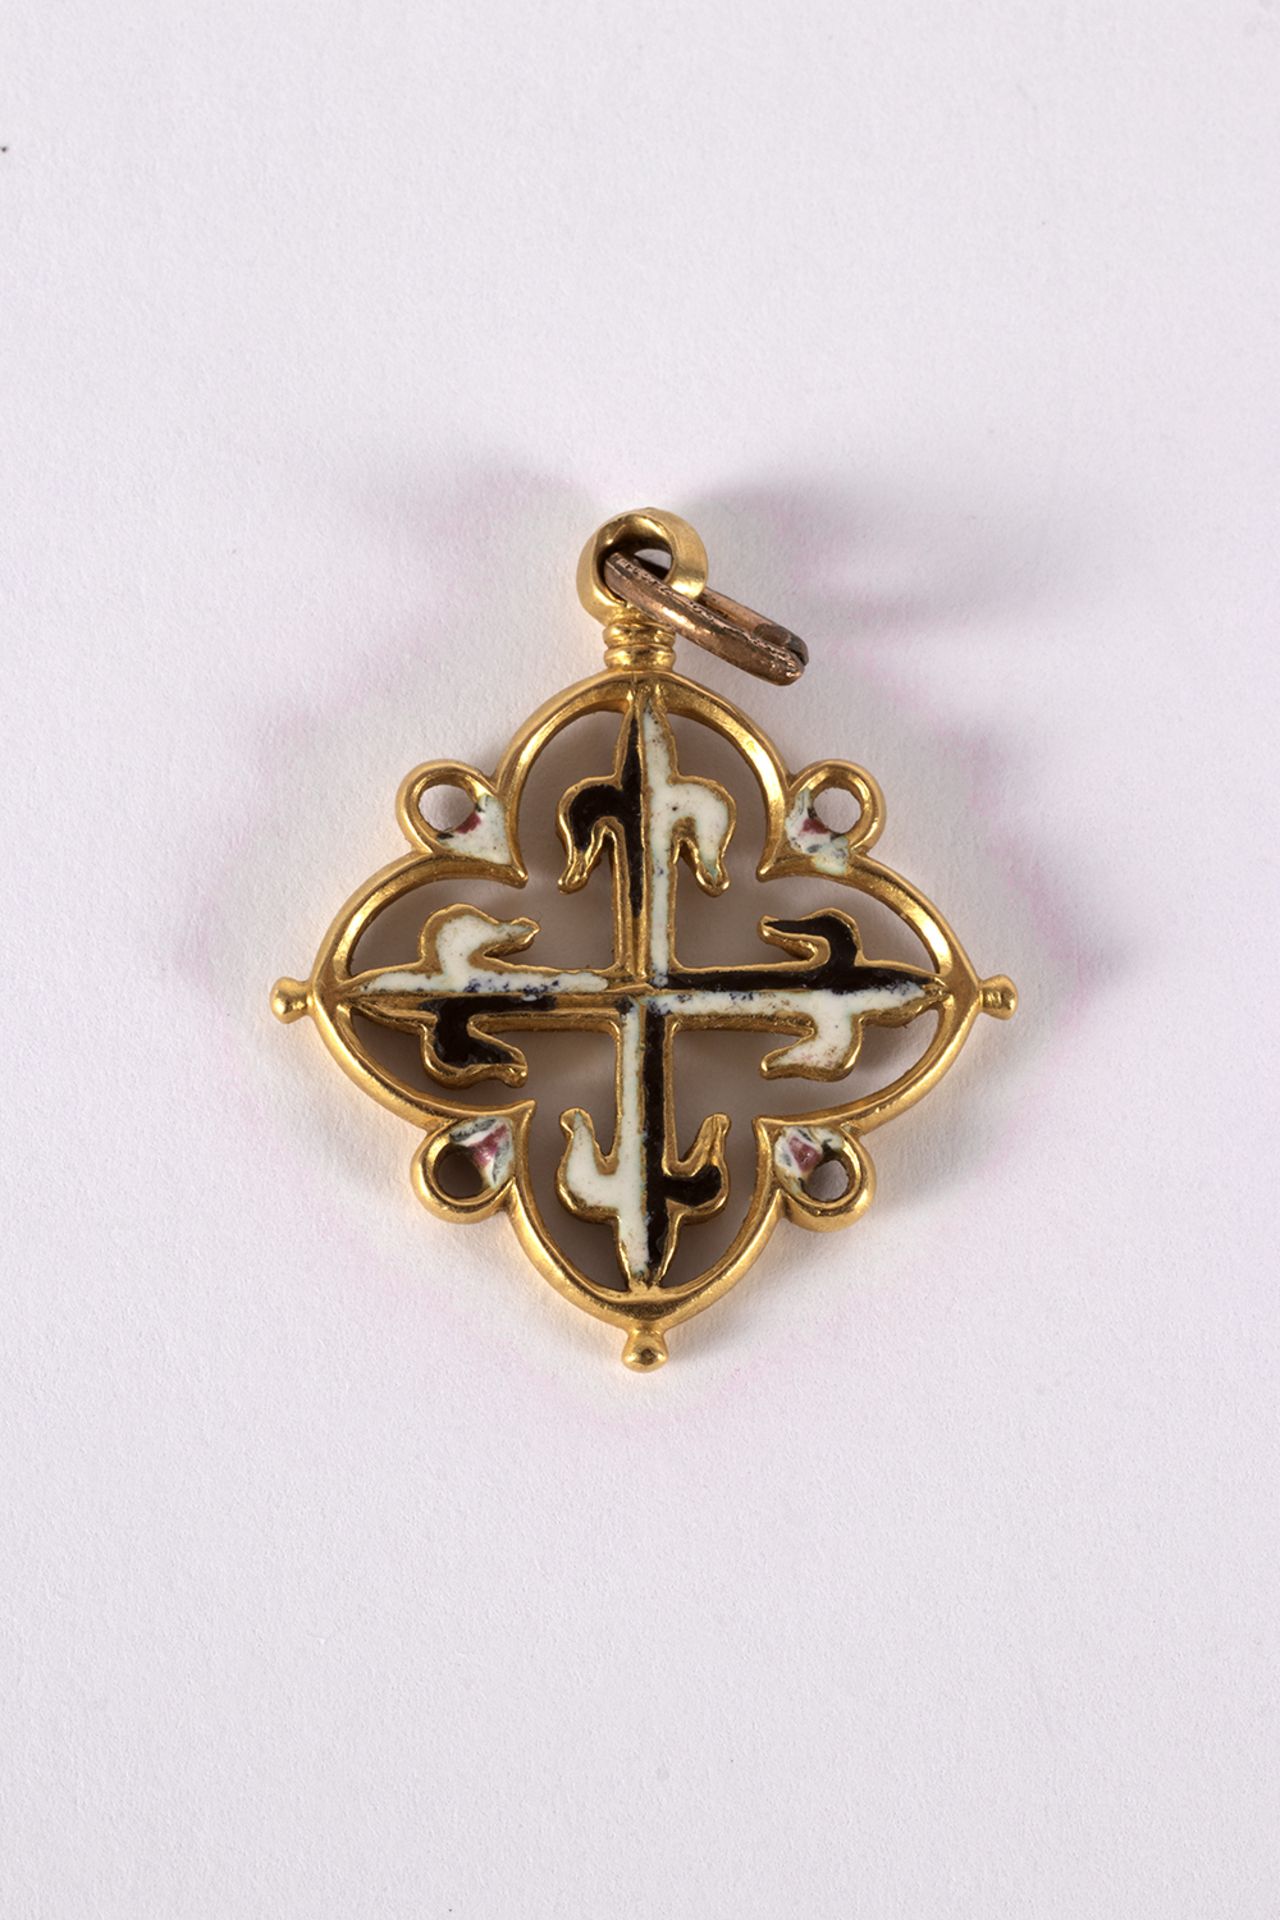 Mallorcan cross pendant in gold and enamels.  - Bild 2 aus 2